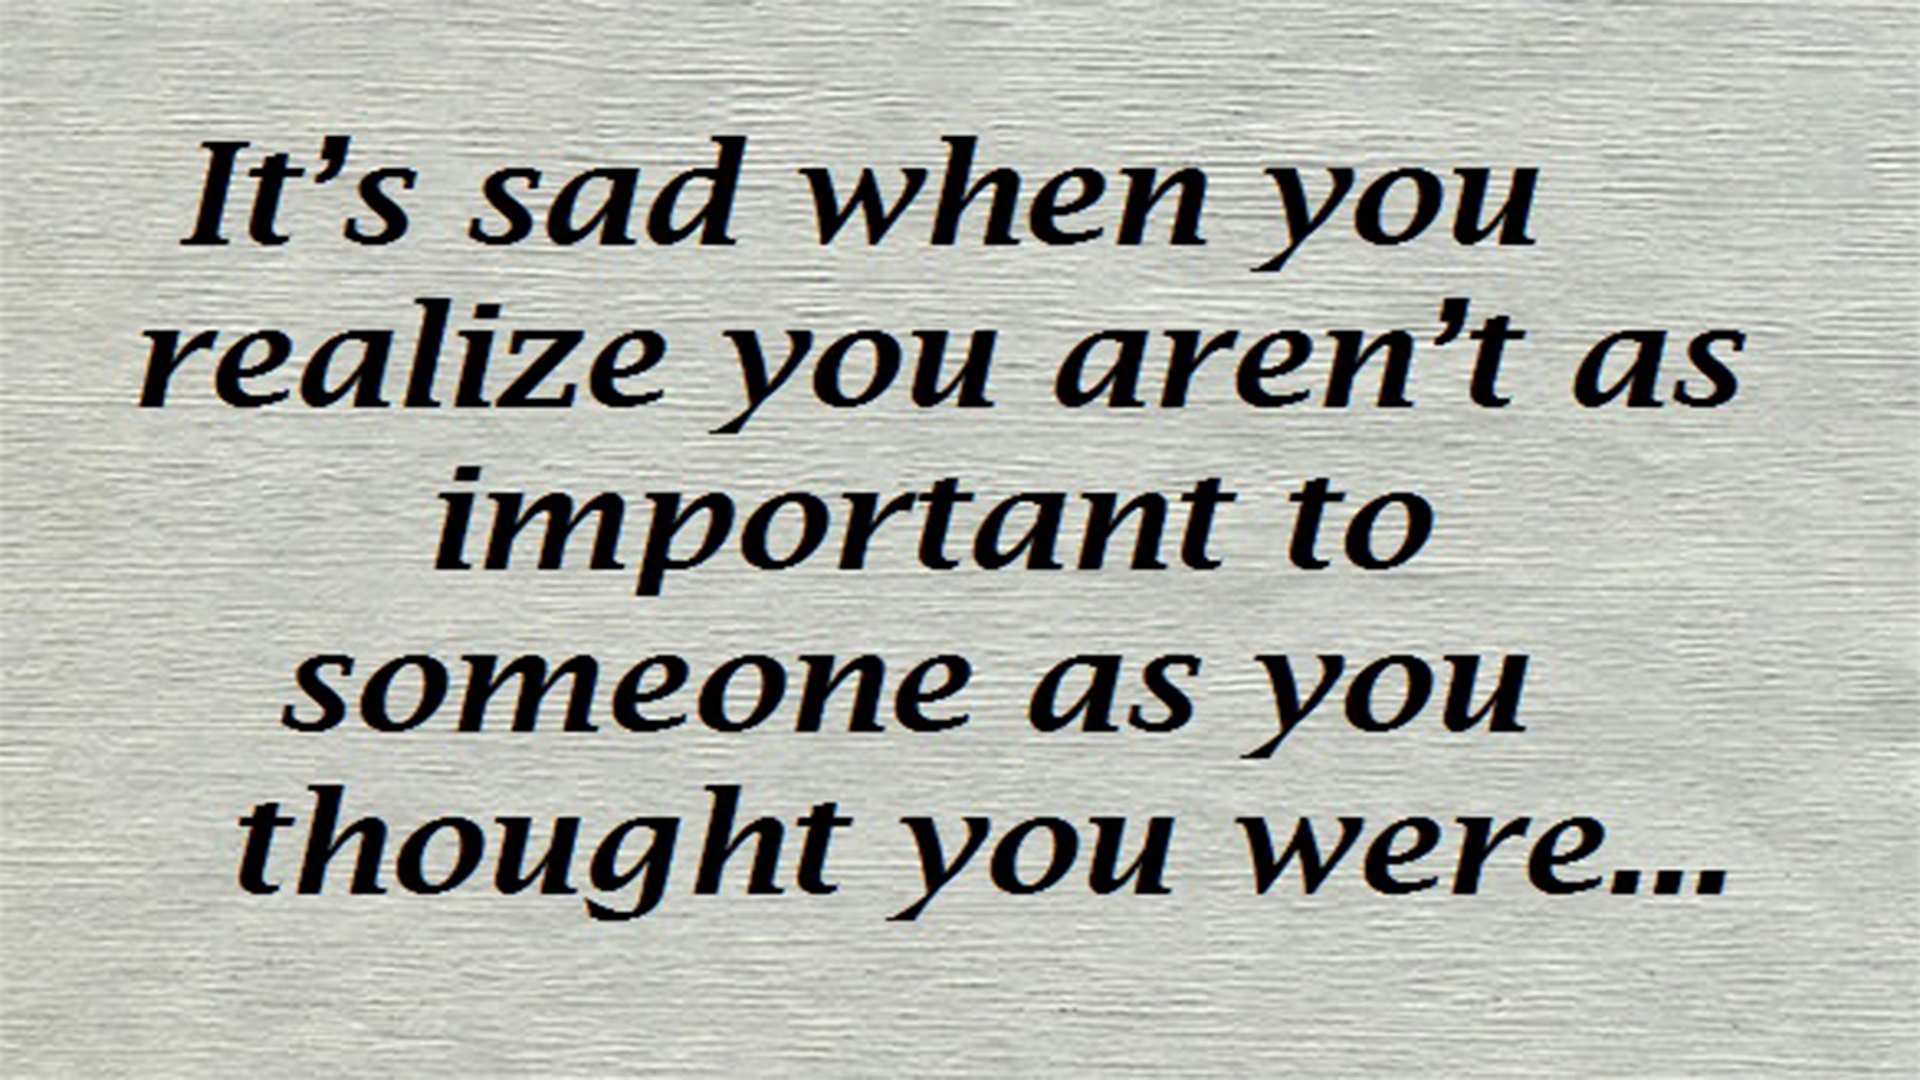 feeling sad quotes